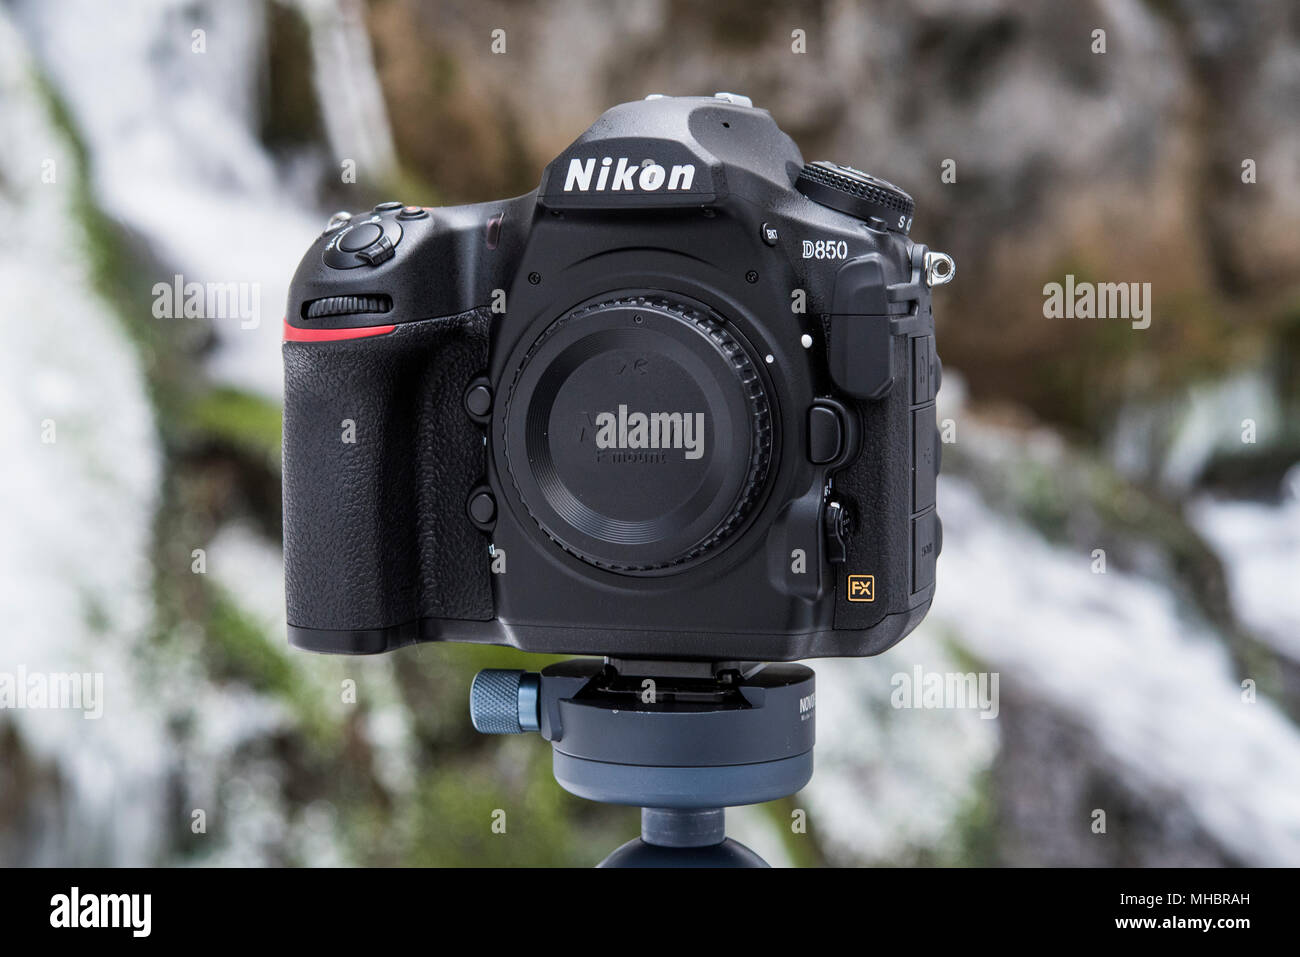 Nikon D850, camera on tripod Stock Photo